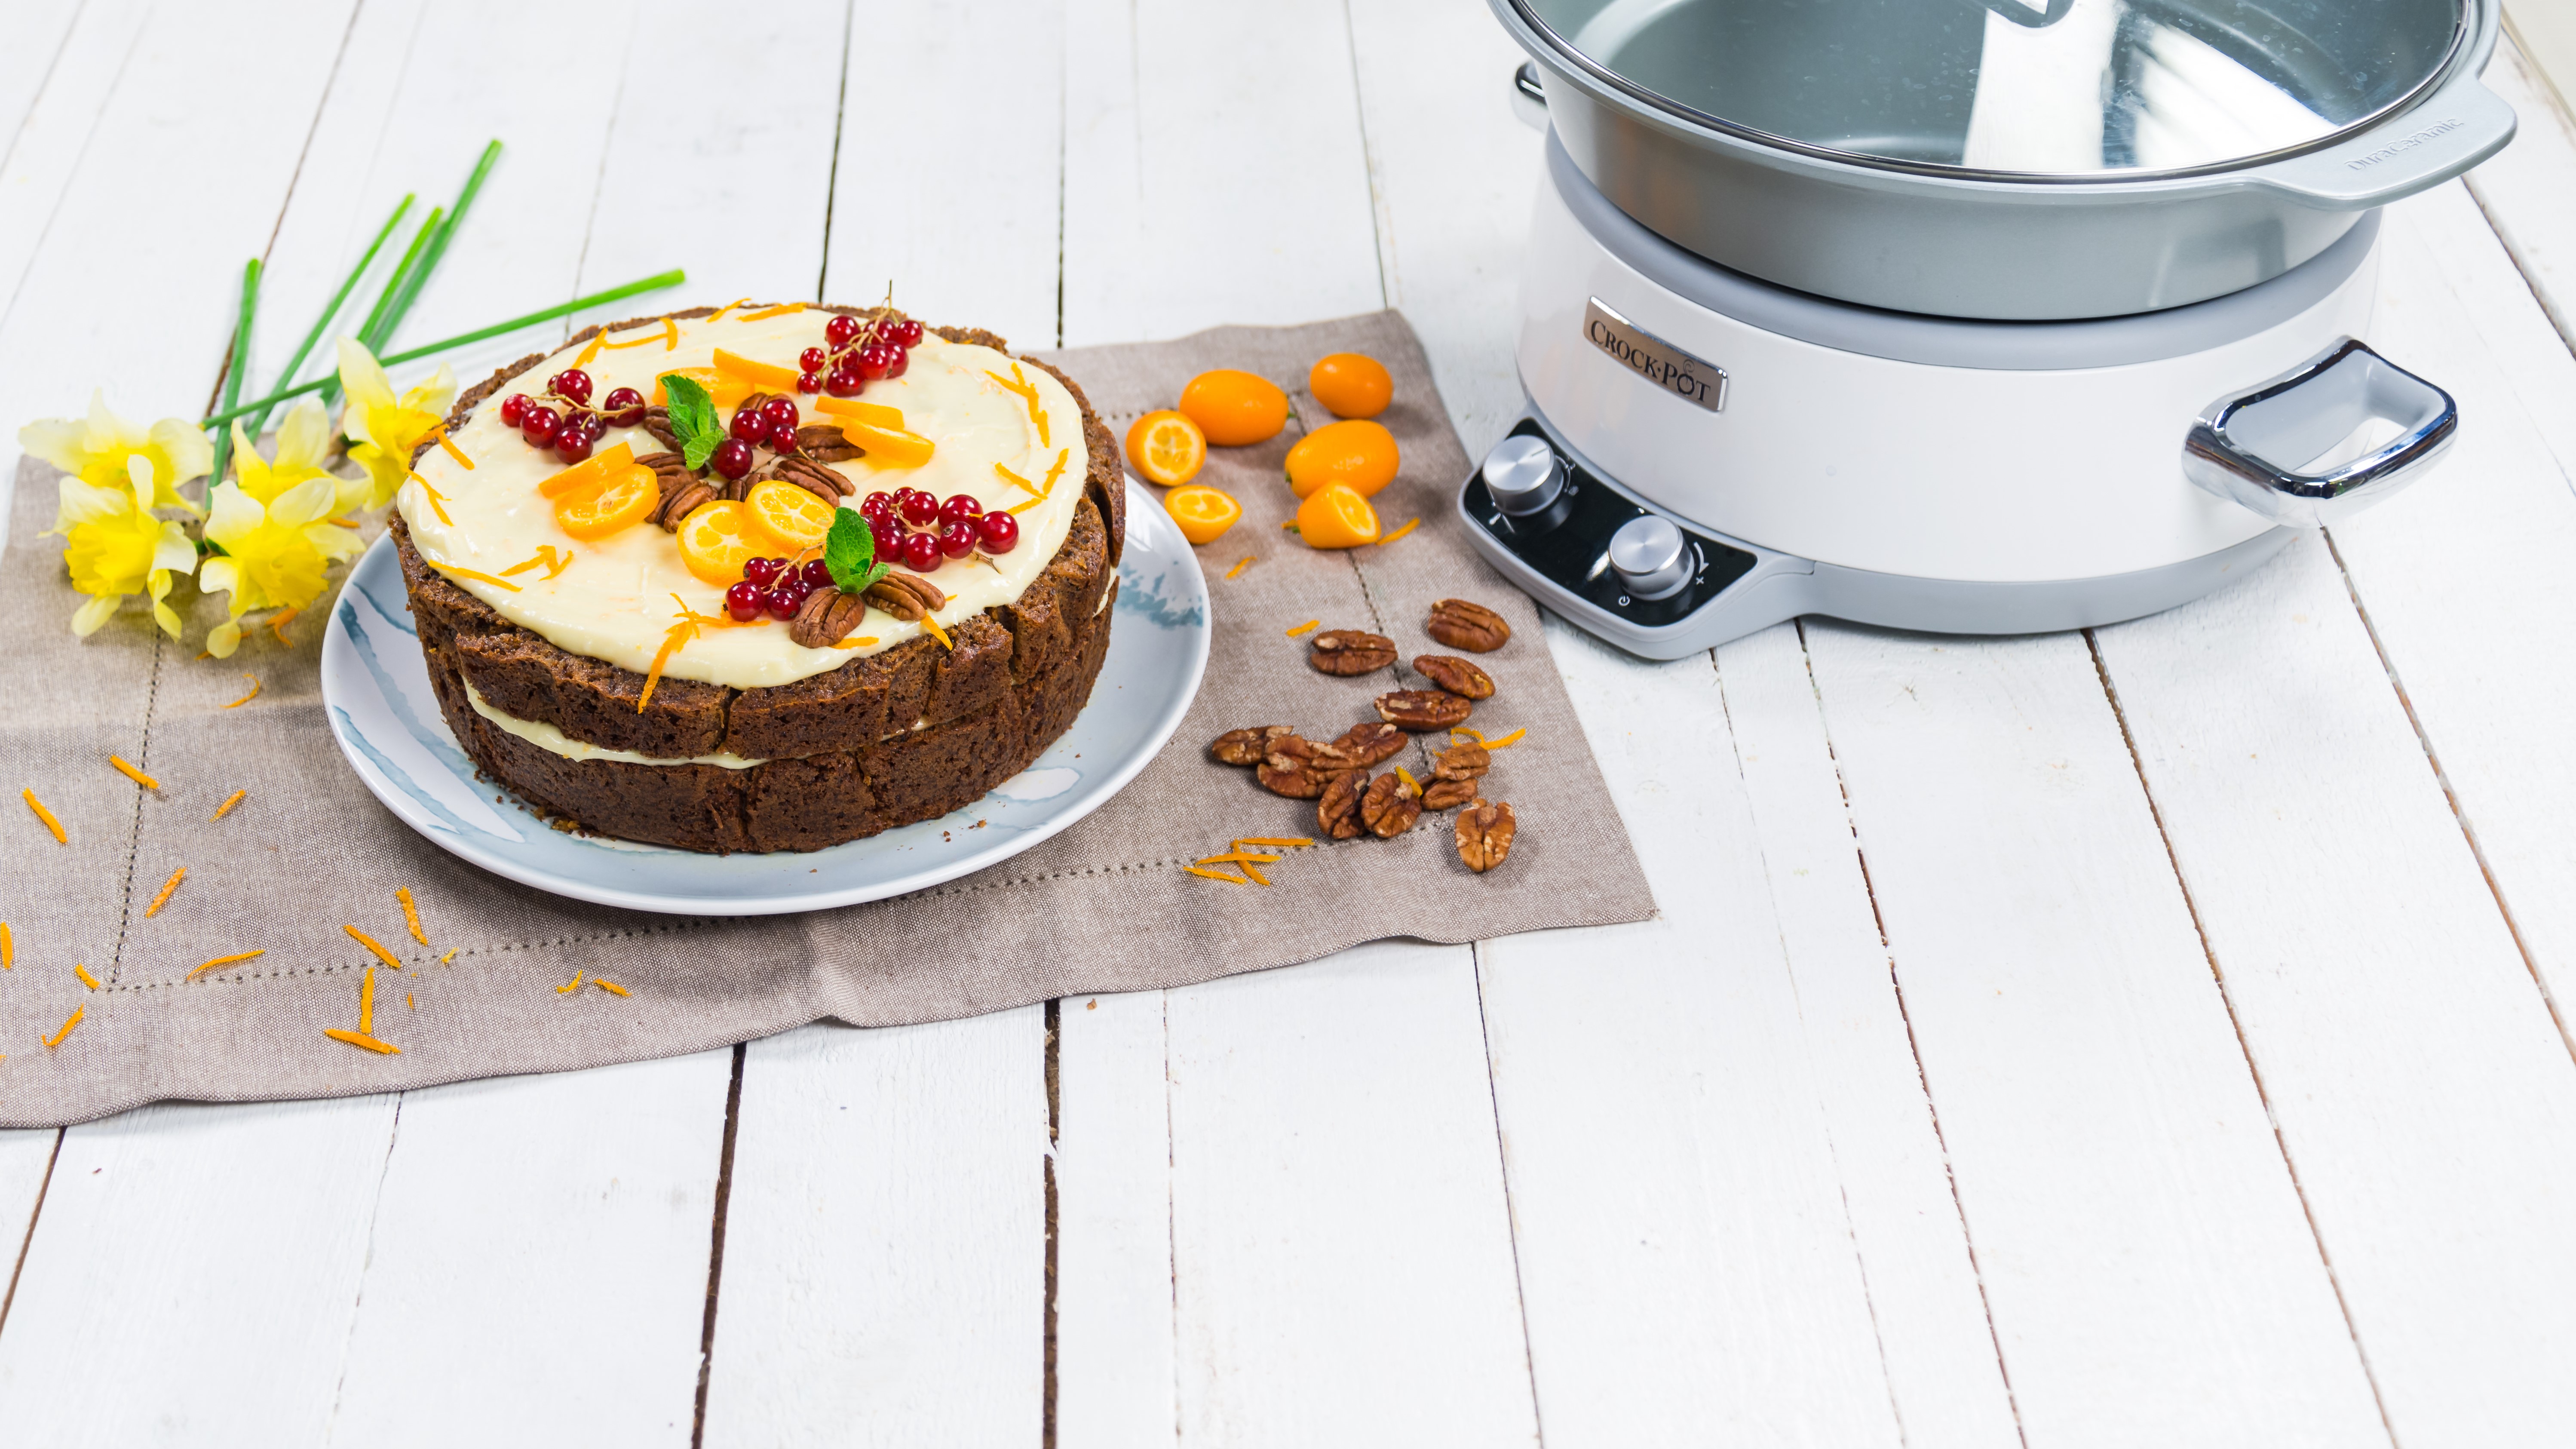 Tort de morcovi la slow cooker-ul Crock-Pot 6l DuraCeramic Saute